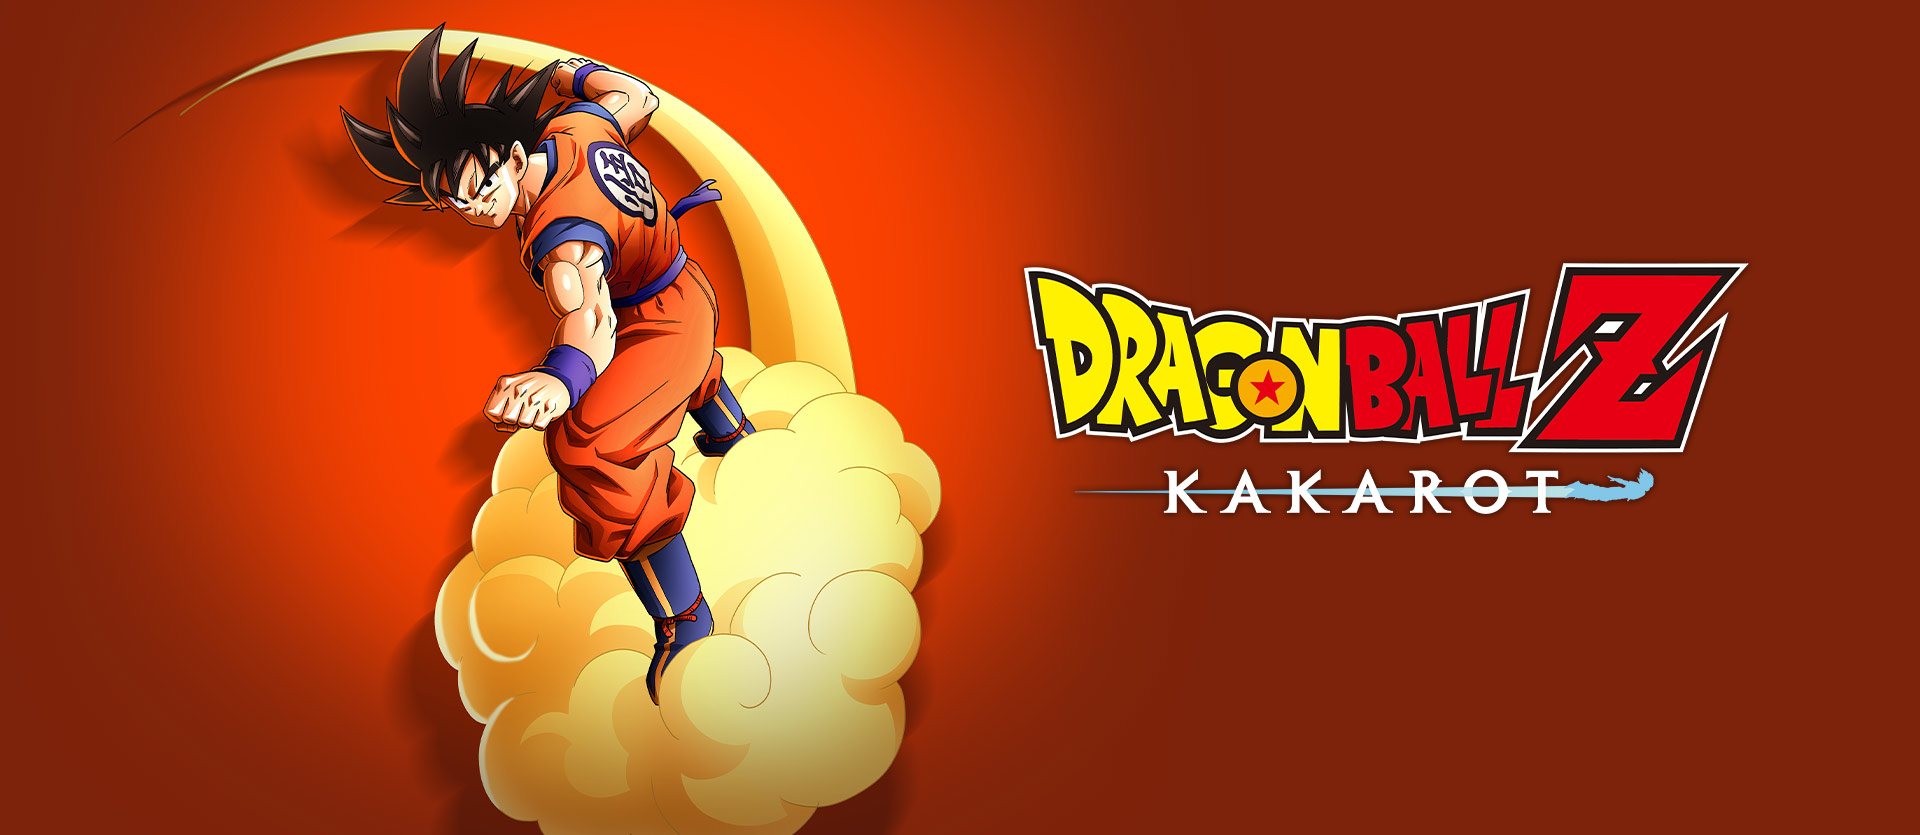 Análise: Dragon Ball Z: Kakarot